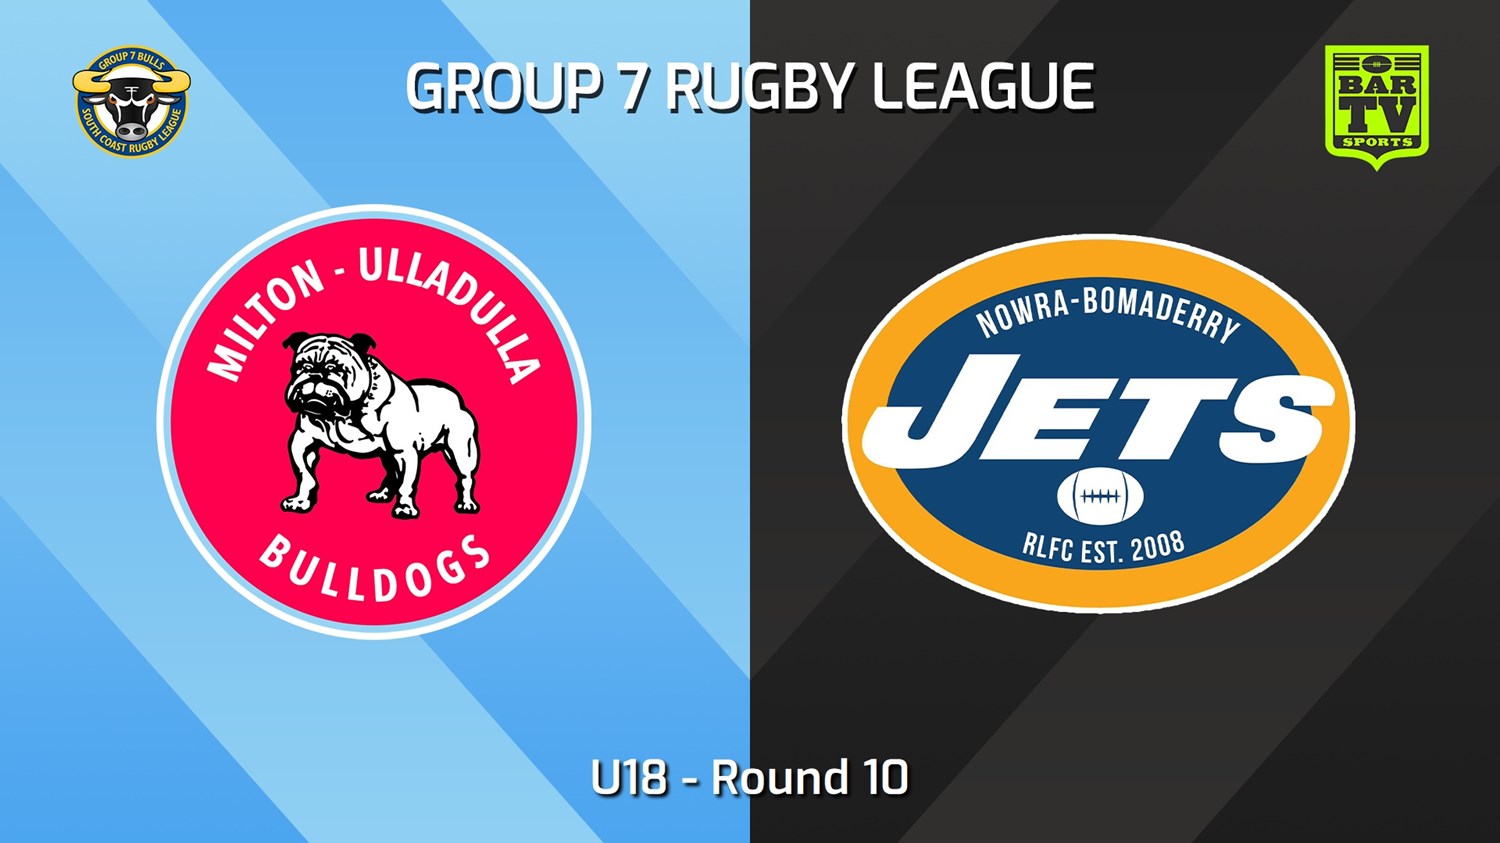 240615-video-South Coast Round 10 - U18 - Milton-Ulladulla Bulldogs v Nowra-Bomaderry Jets Slate Image